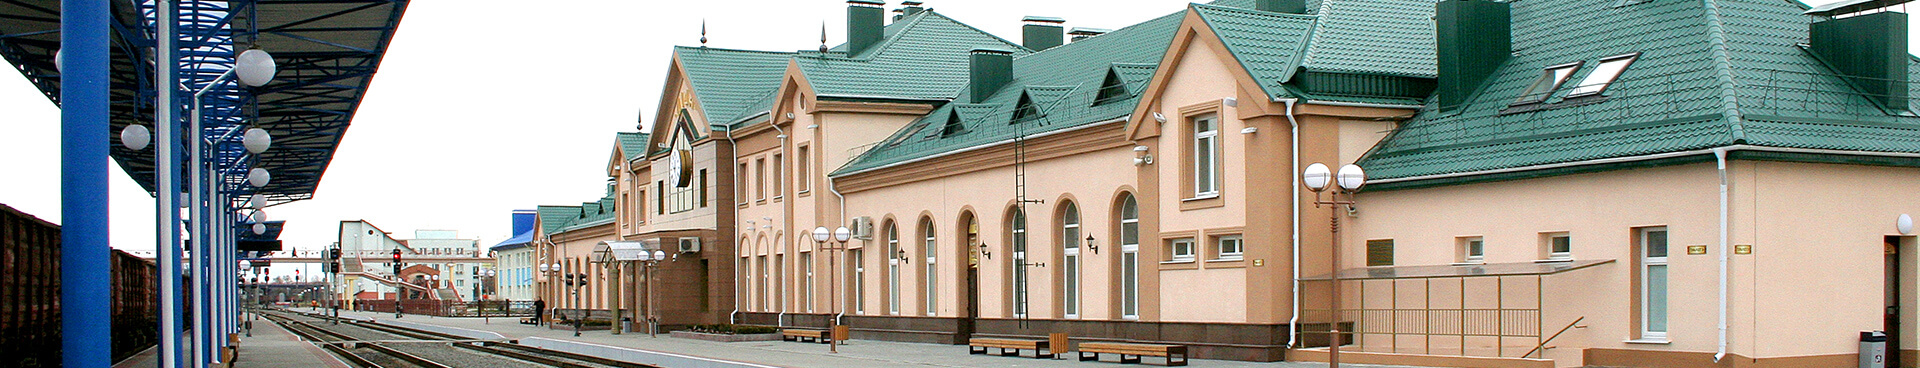 Lida Railway Station